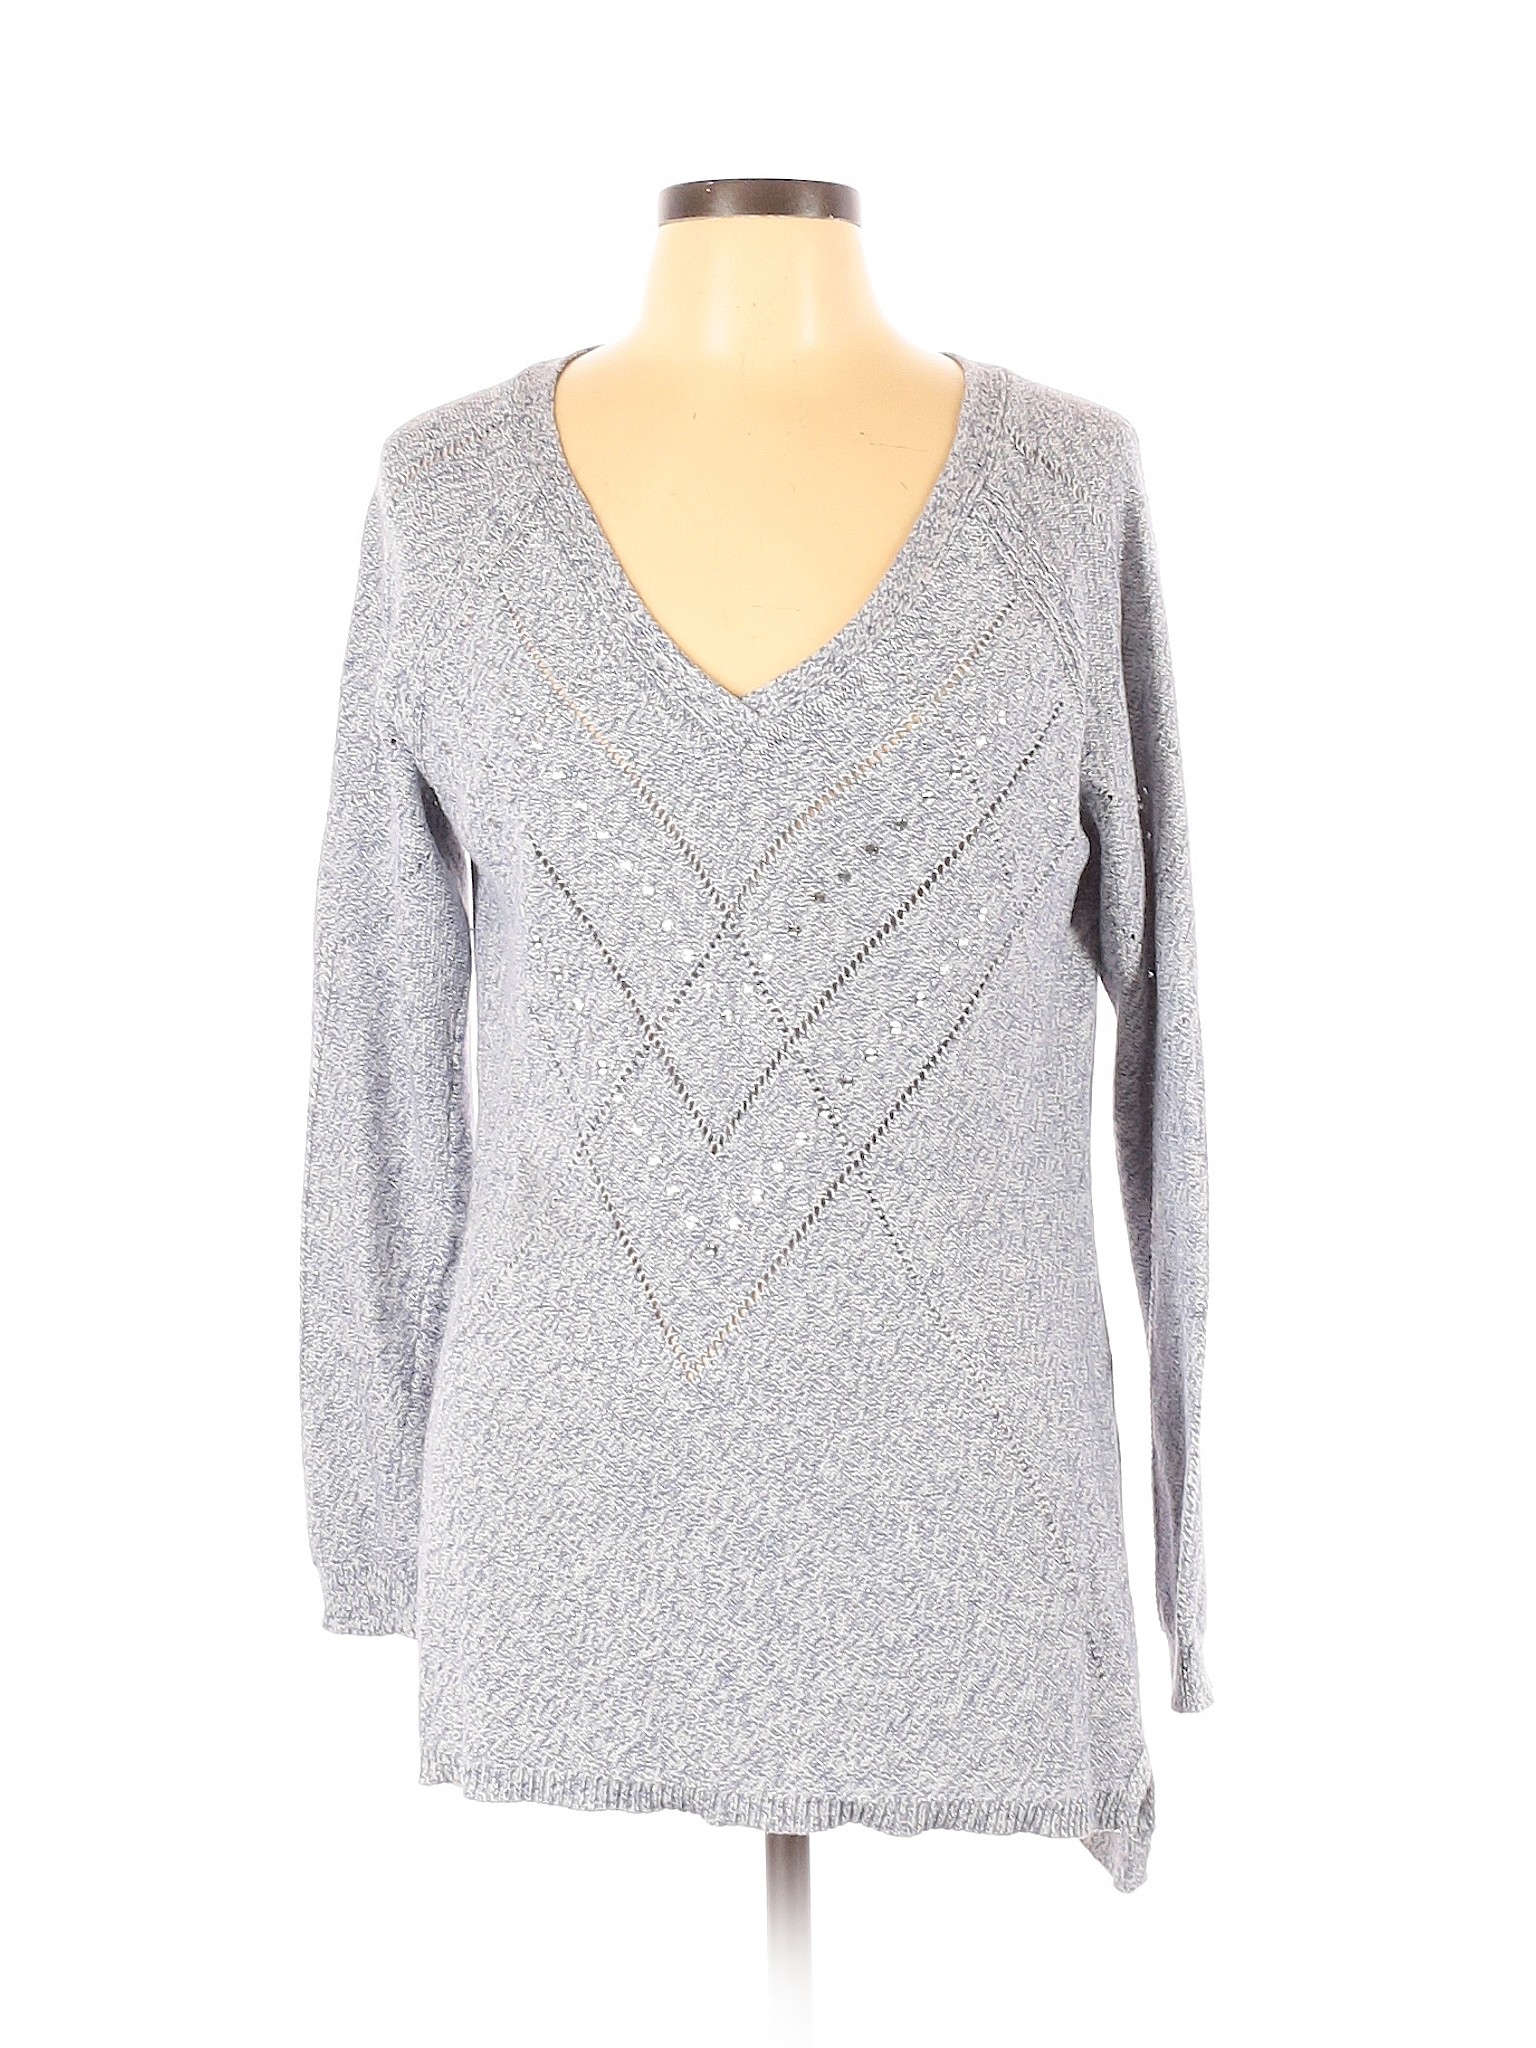 White House Black Market Women Gray Pullover Sweater L | eBay